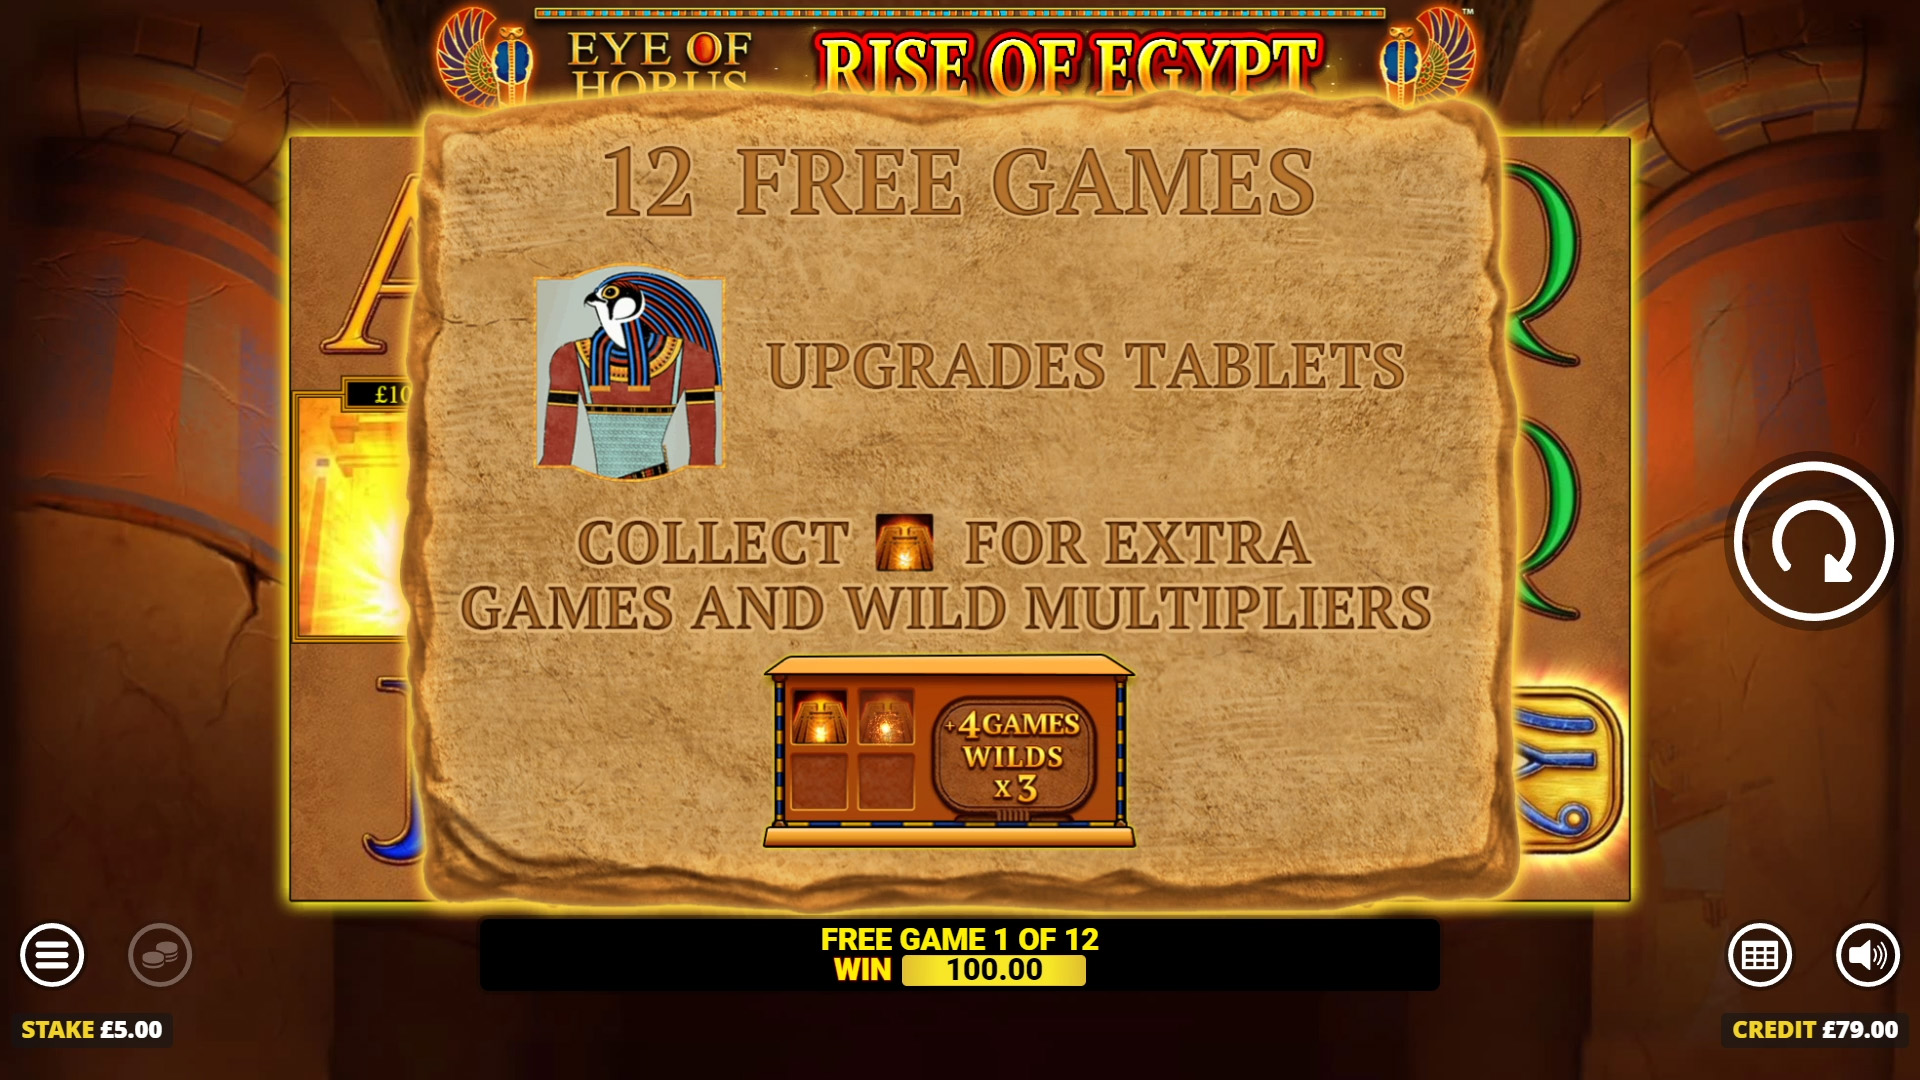 Eye of horus rise of egypt slot free spins